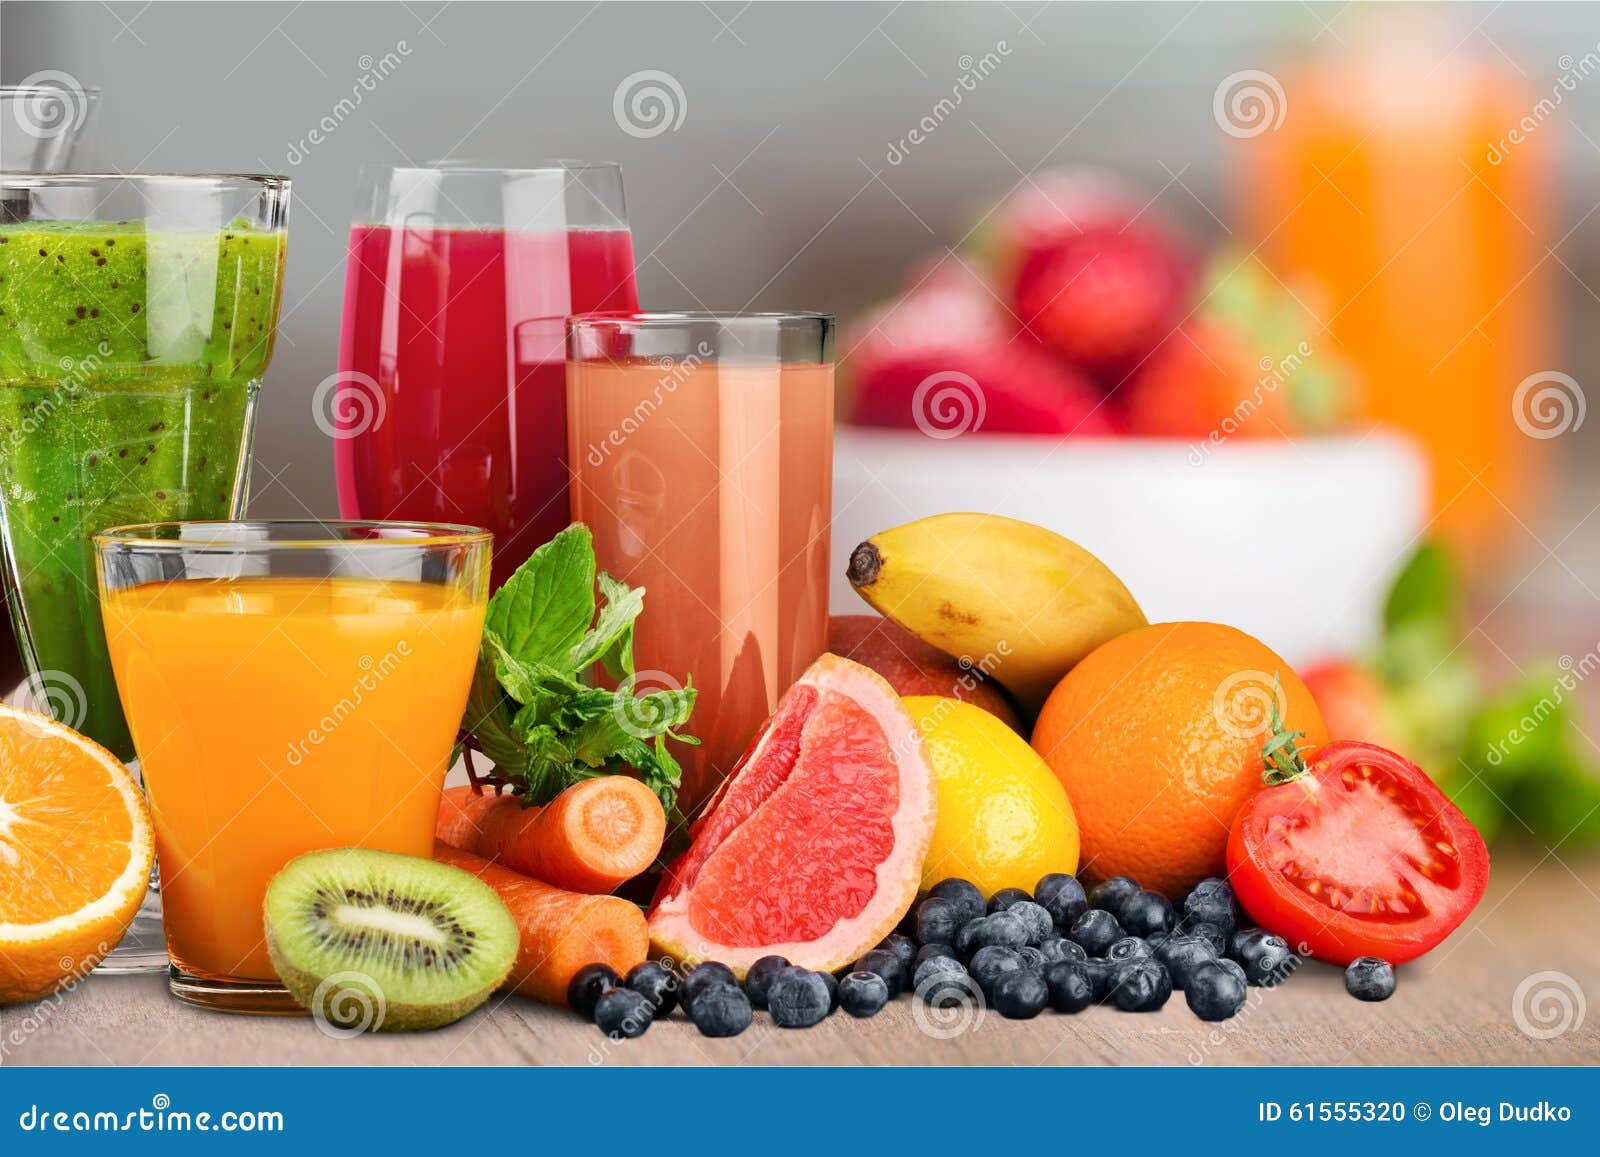 fruit drinks